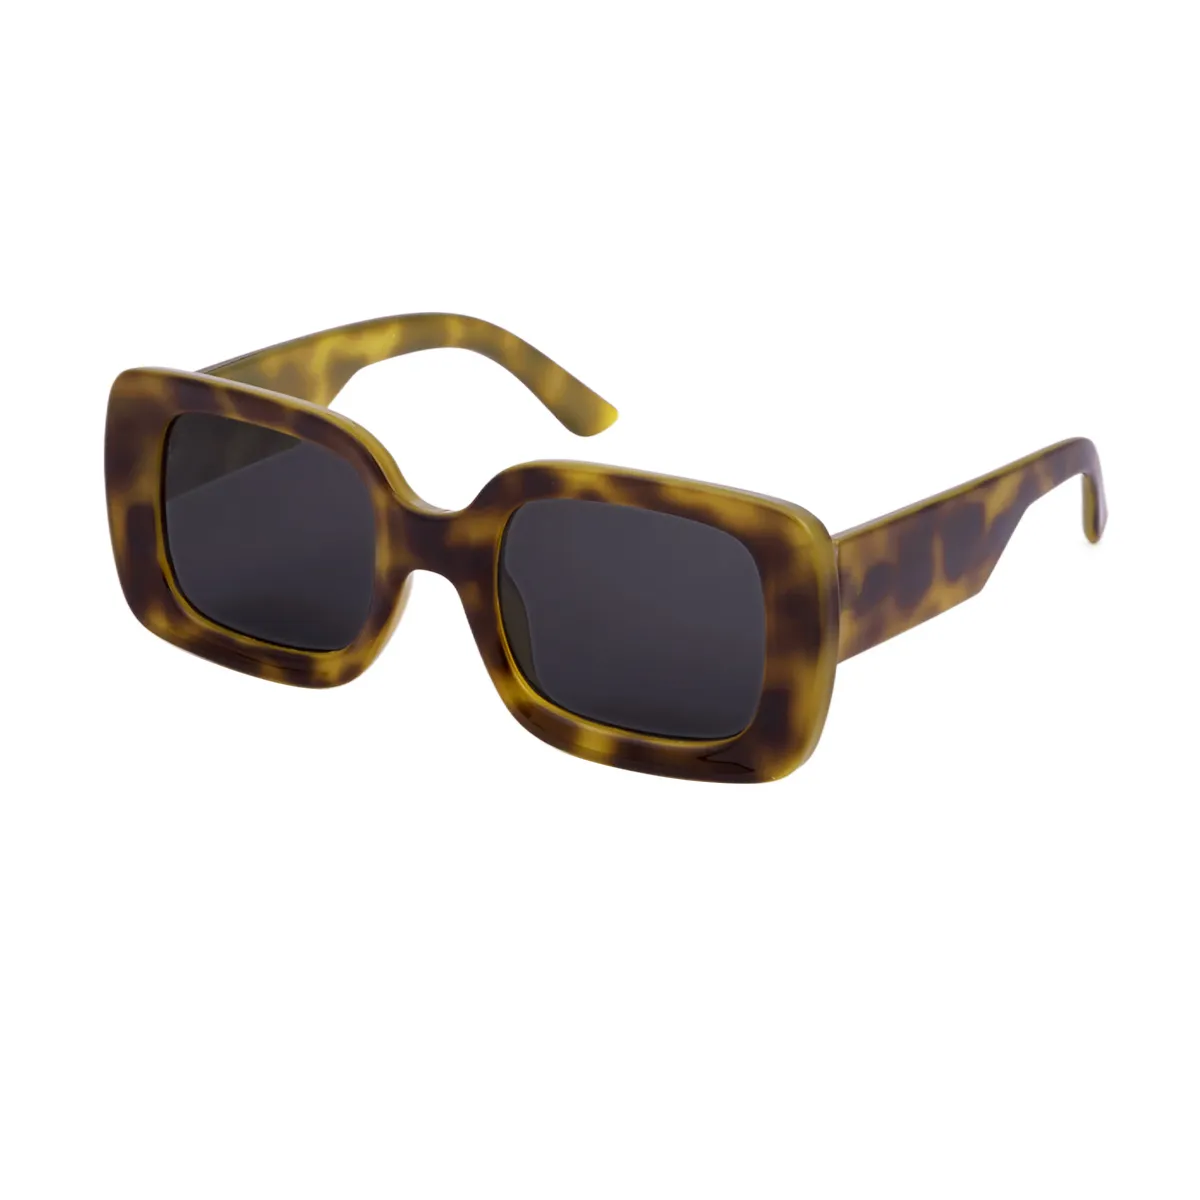 Anastasia - Square Tortoiseshell Sunglasses for Women